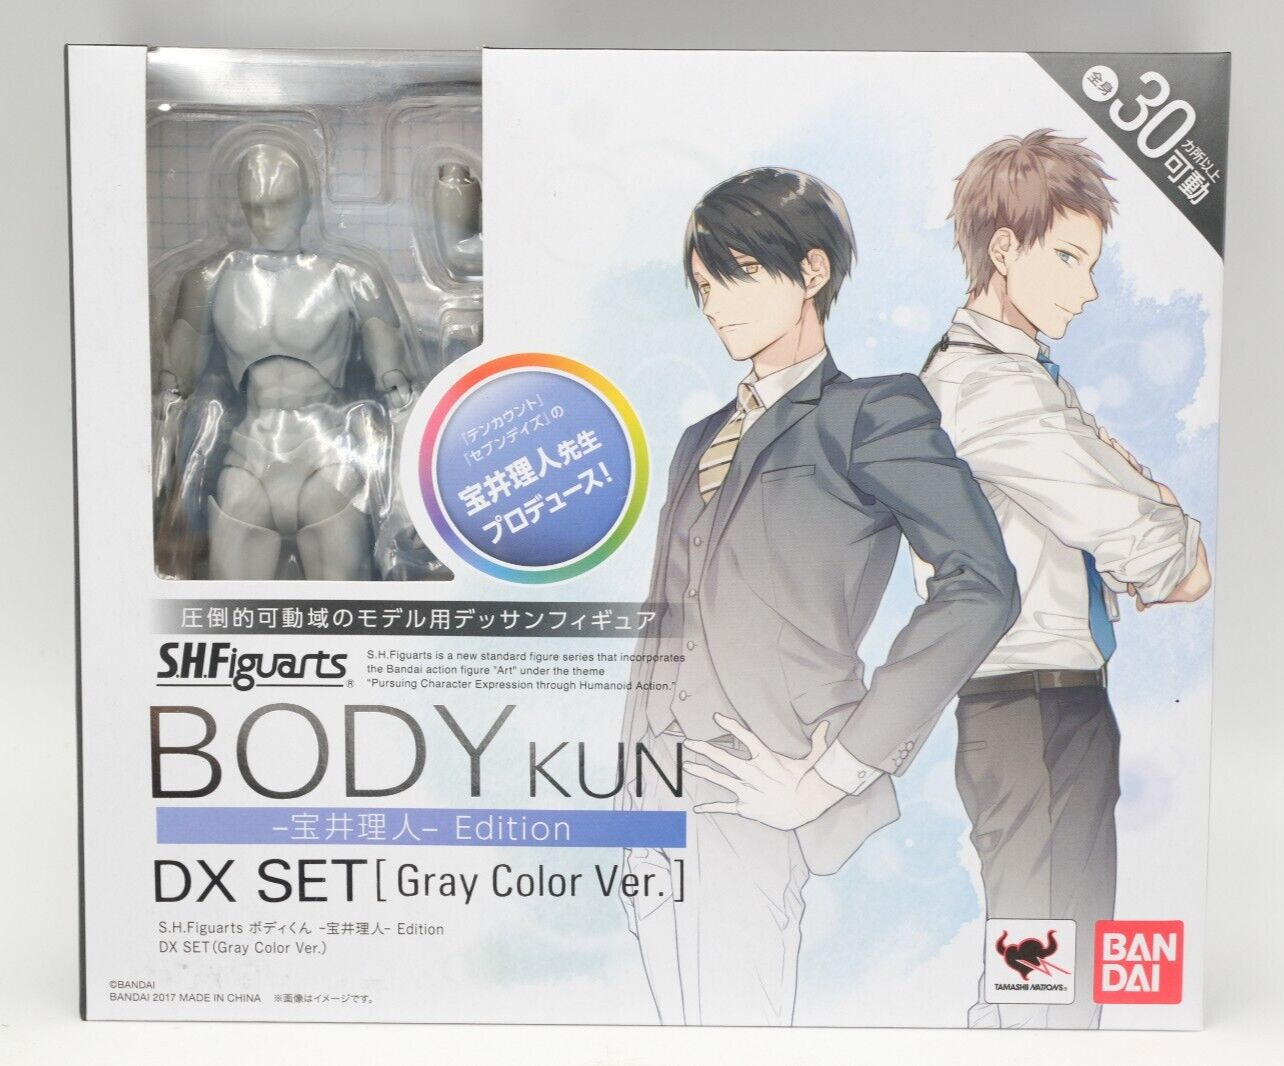 New Bandai Tamashii Nations S.H.Figuarts Body-Kun Takarai DX Set Gray Color Ver 